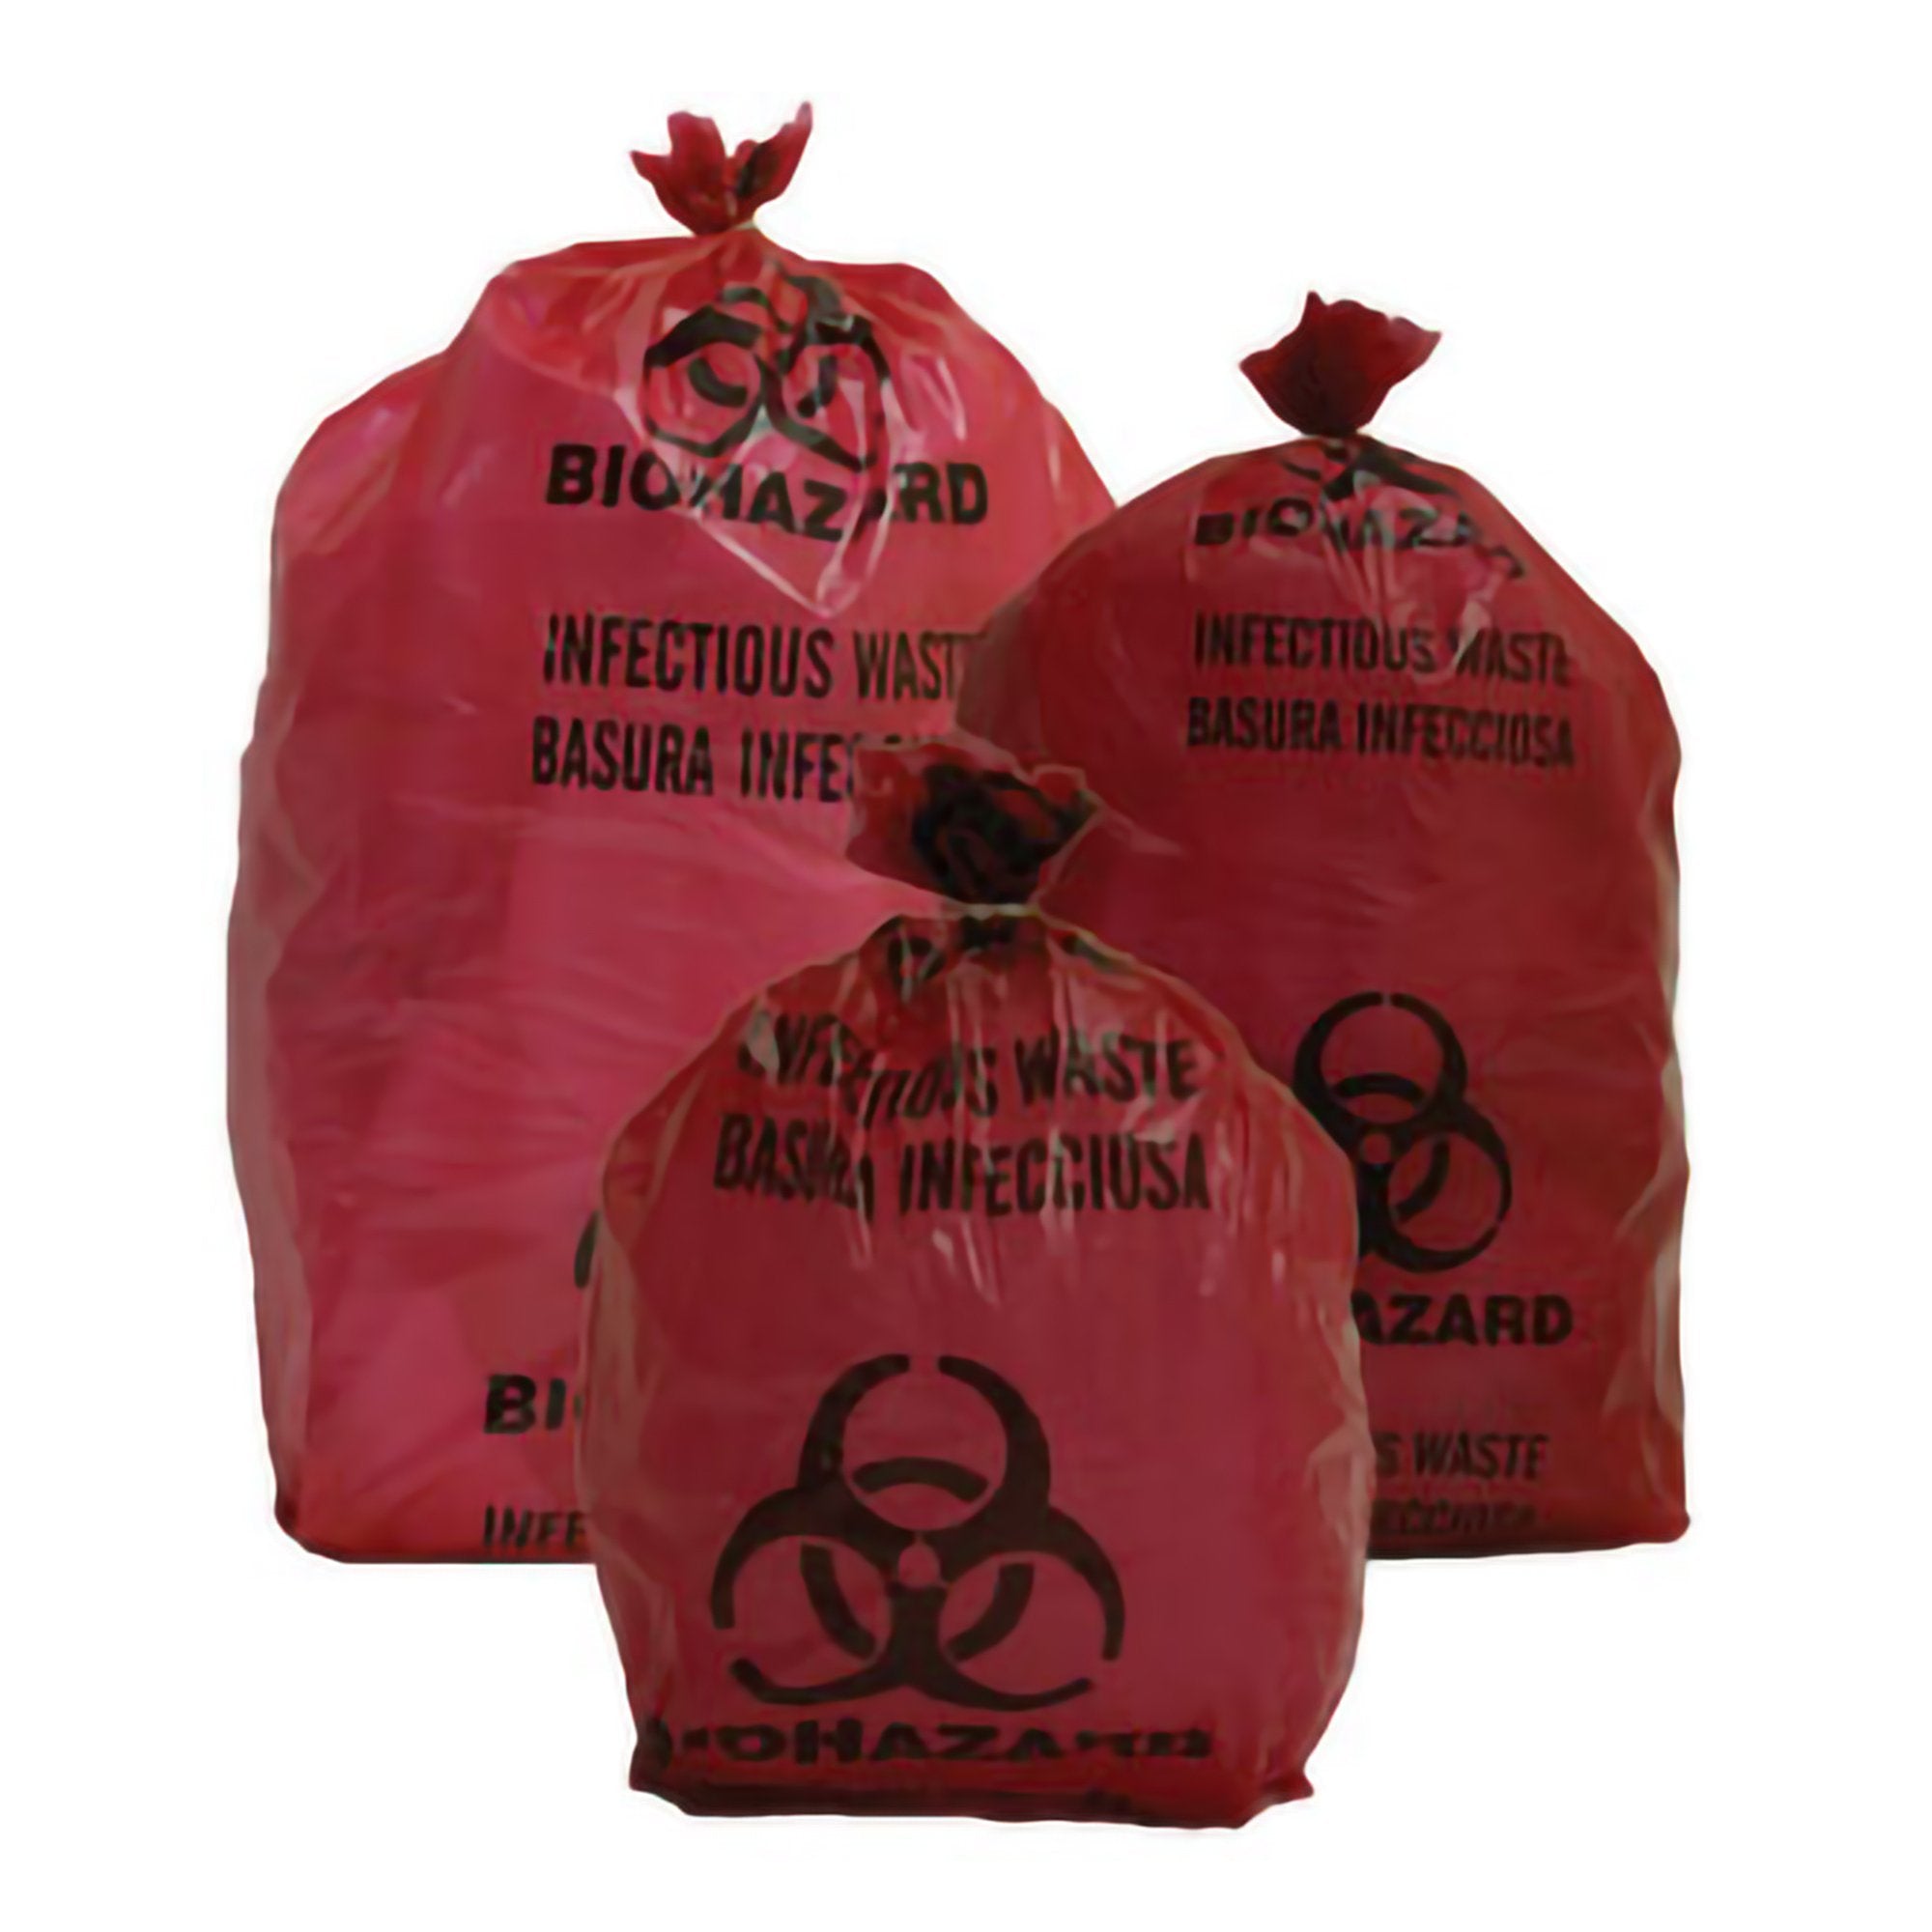 Biohazard Waste Bag 3 gal. Red Bag 14 X 18-1/2 Inch